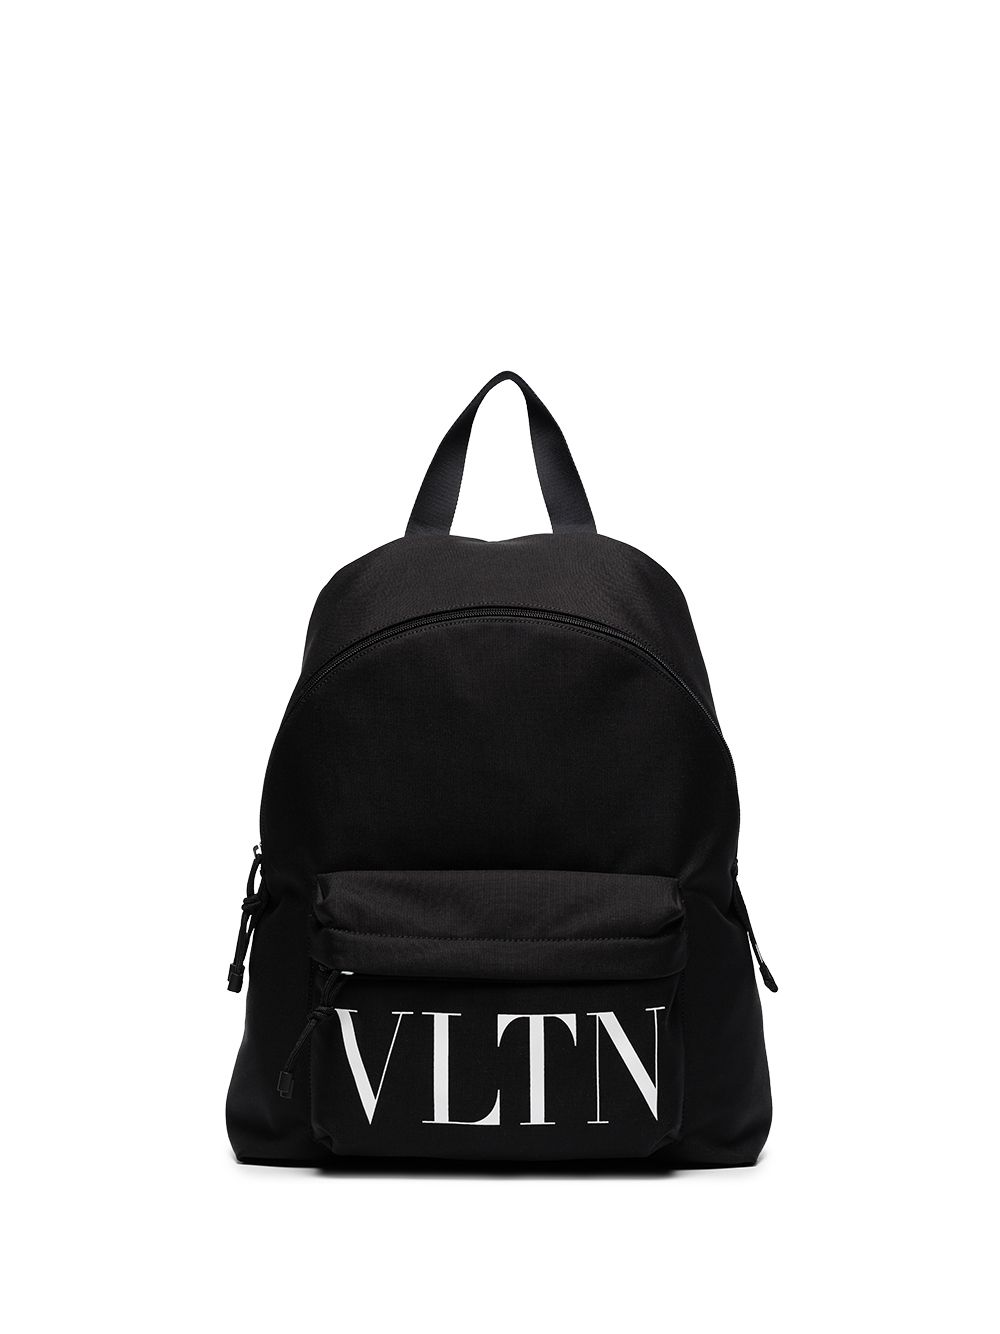 Valentino Garavani VLTN print backpack - Black